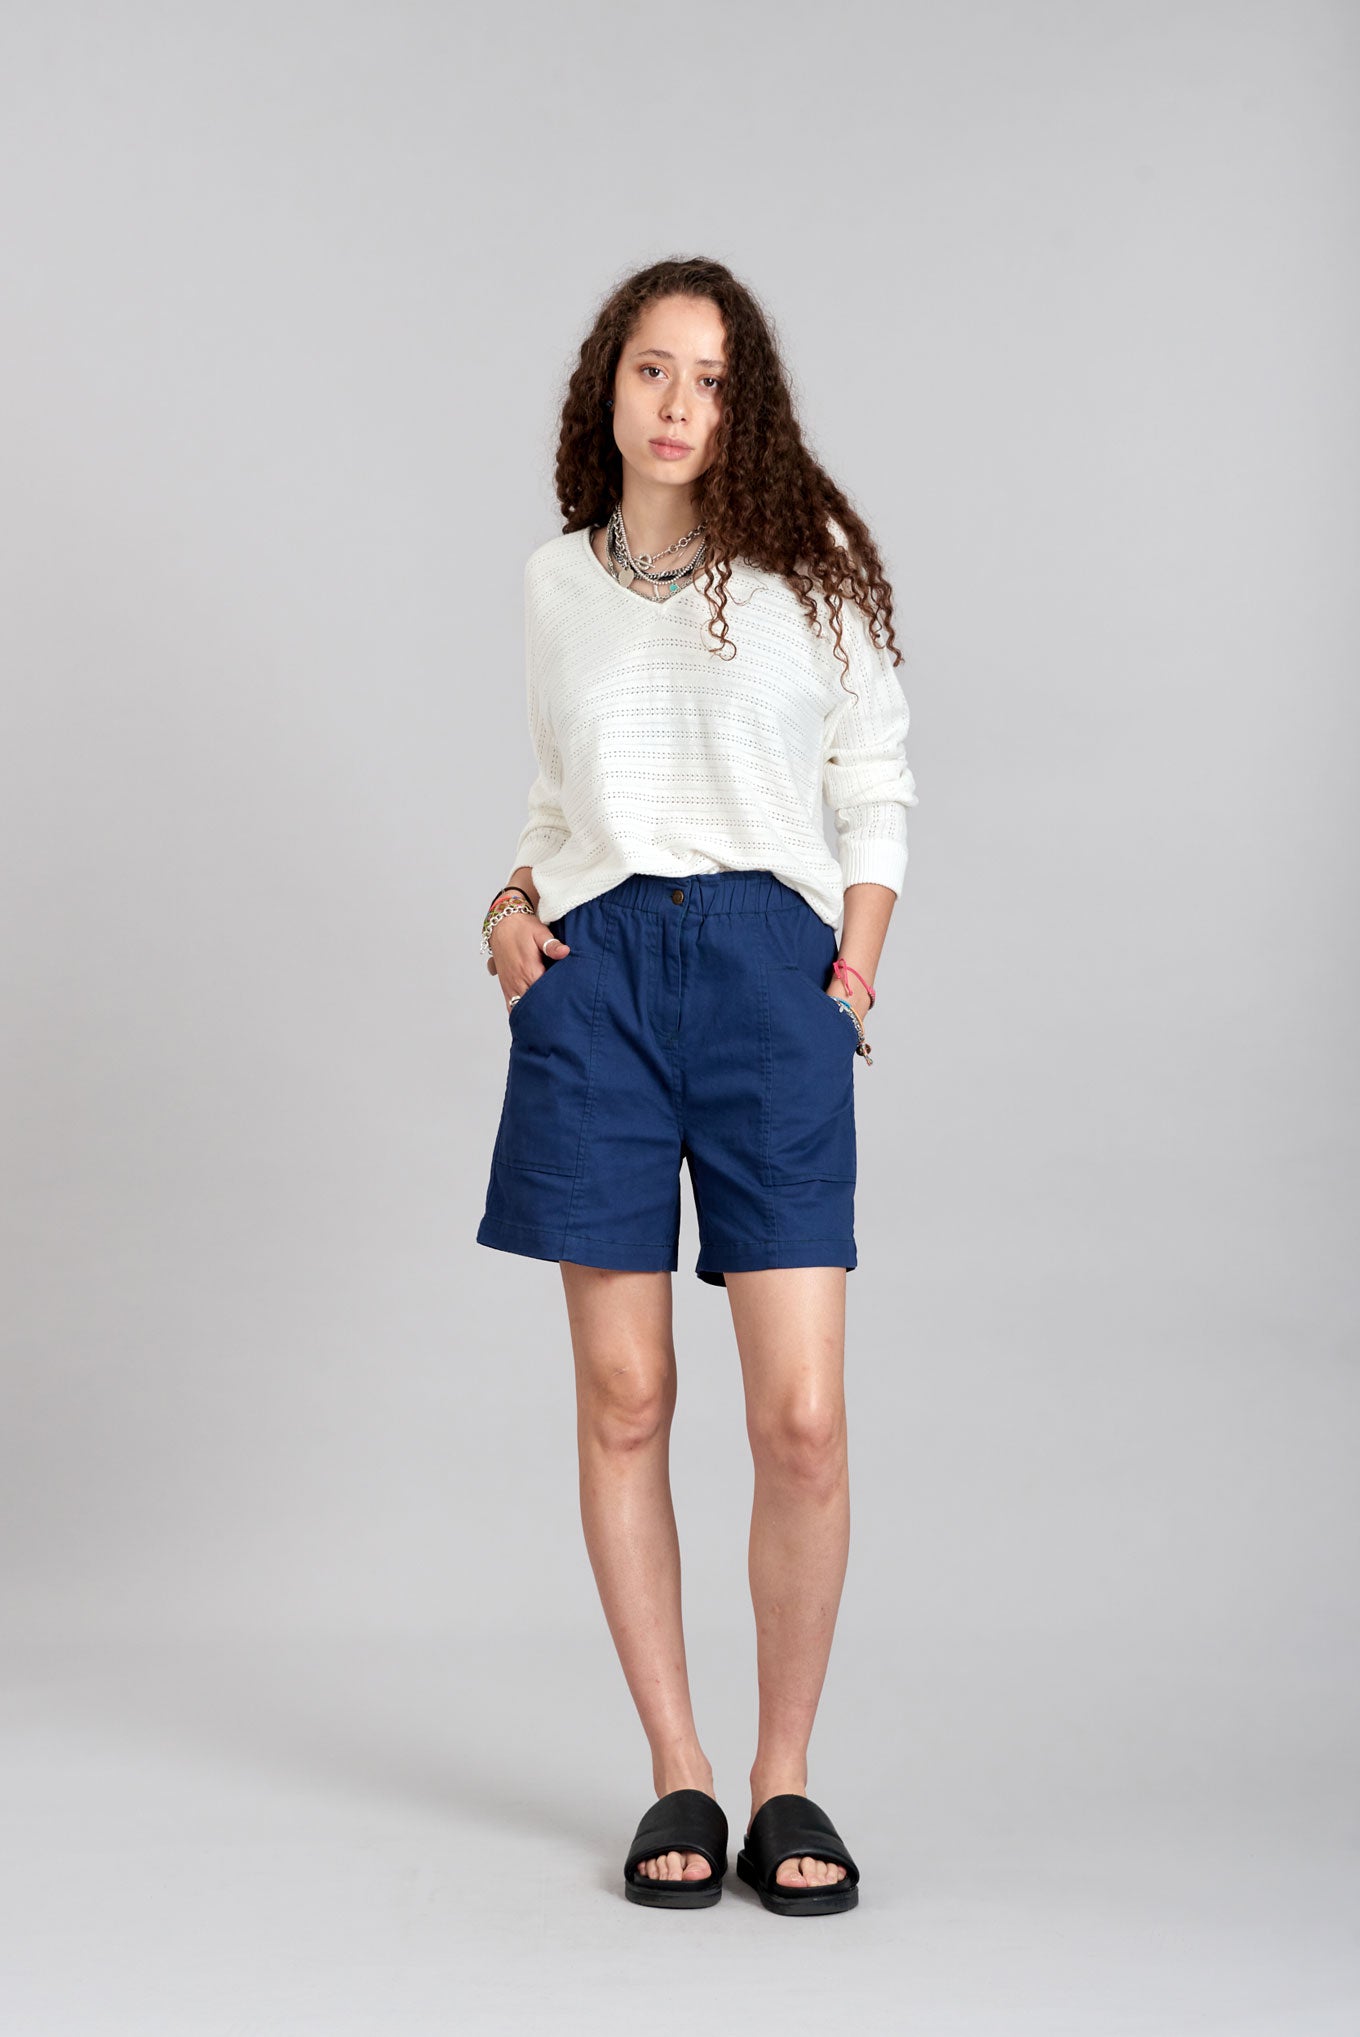 DUNE - Cotton Shorts Navy